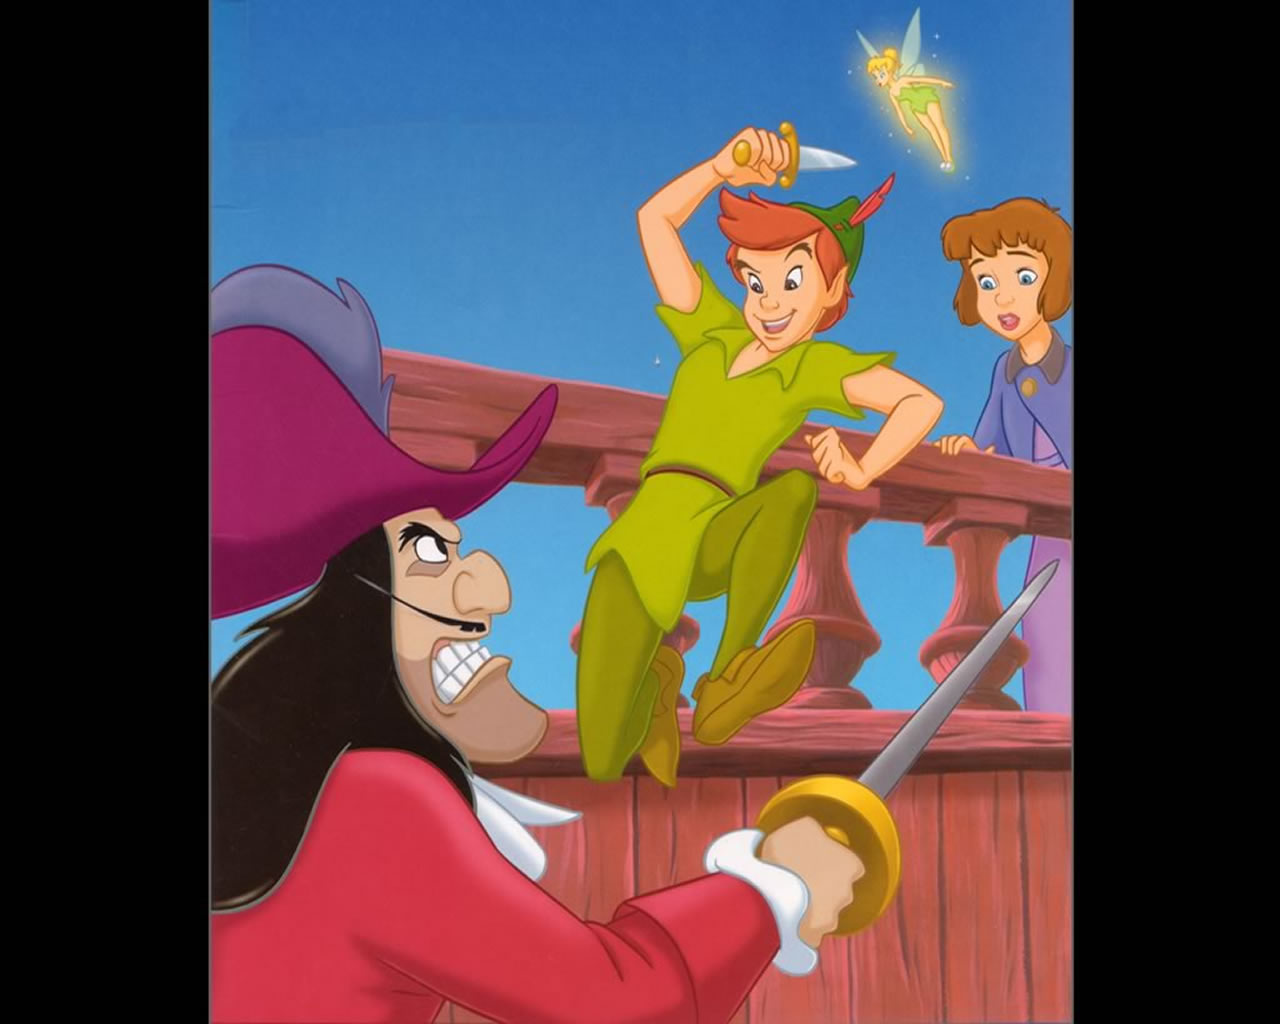 download wallpaper: Peter Pan en kapitein Haak wallpaper